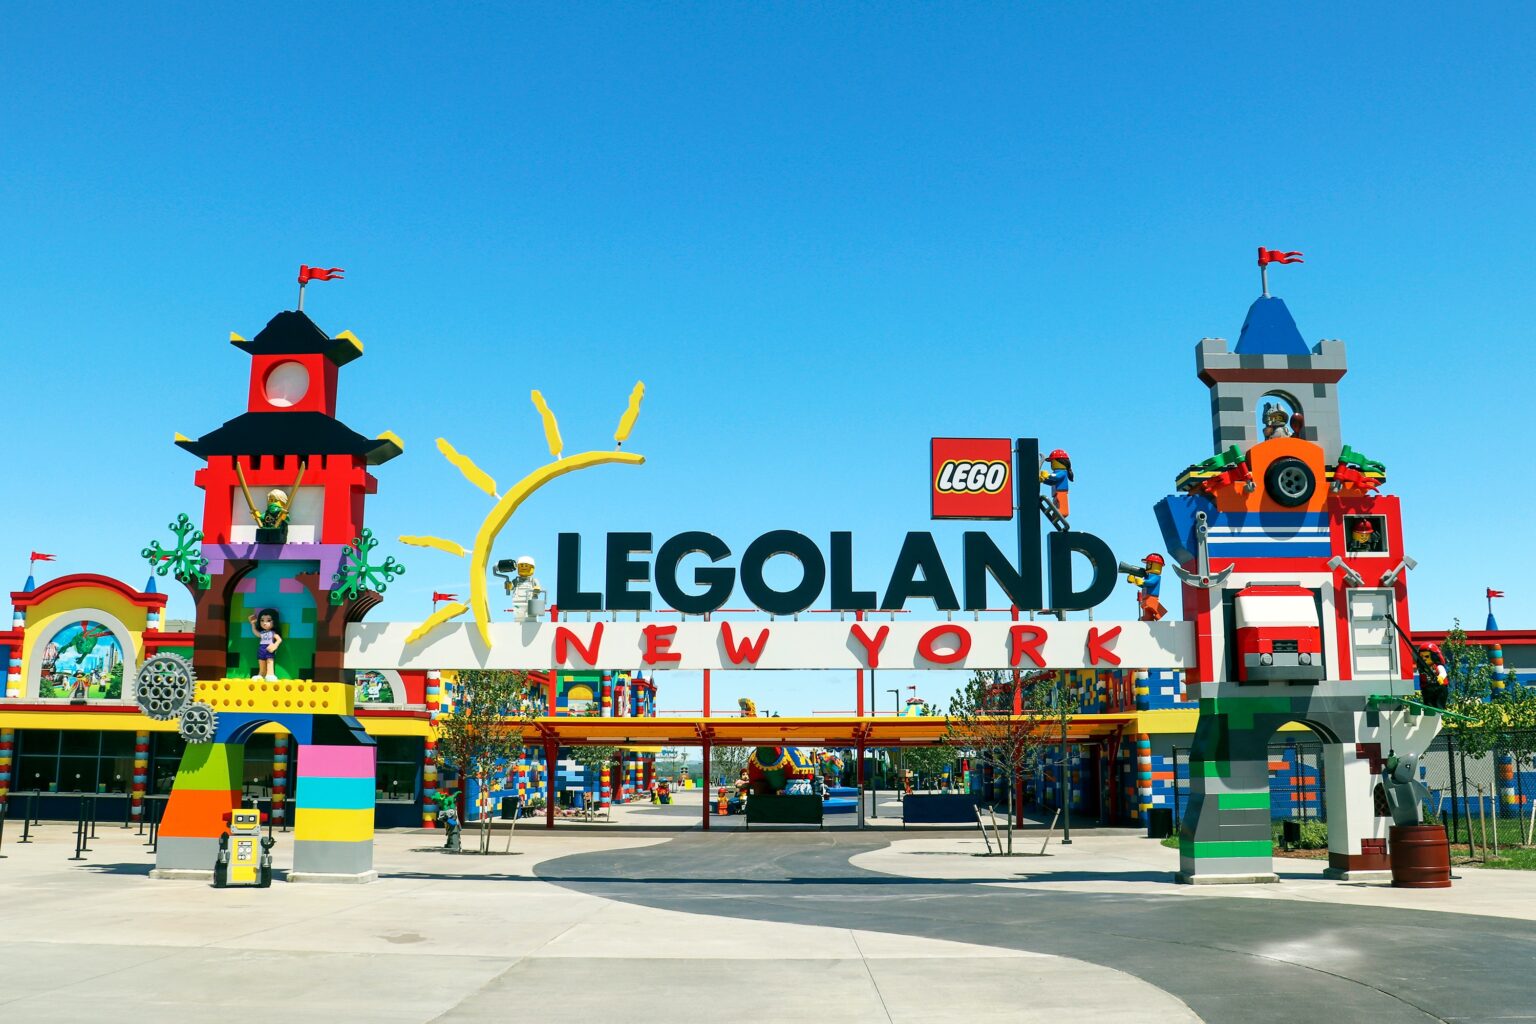 Legoland-New-York-Resort-Entrance-Photo-courtesy-of-Legoland-New-York-Resort-1536x1024.jpg